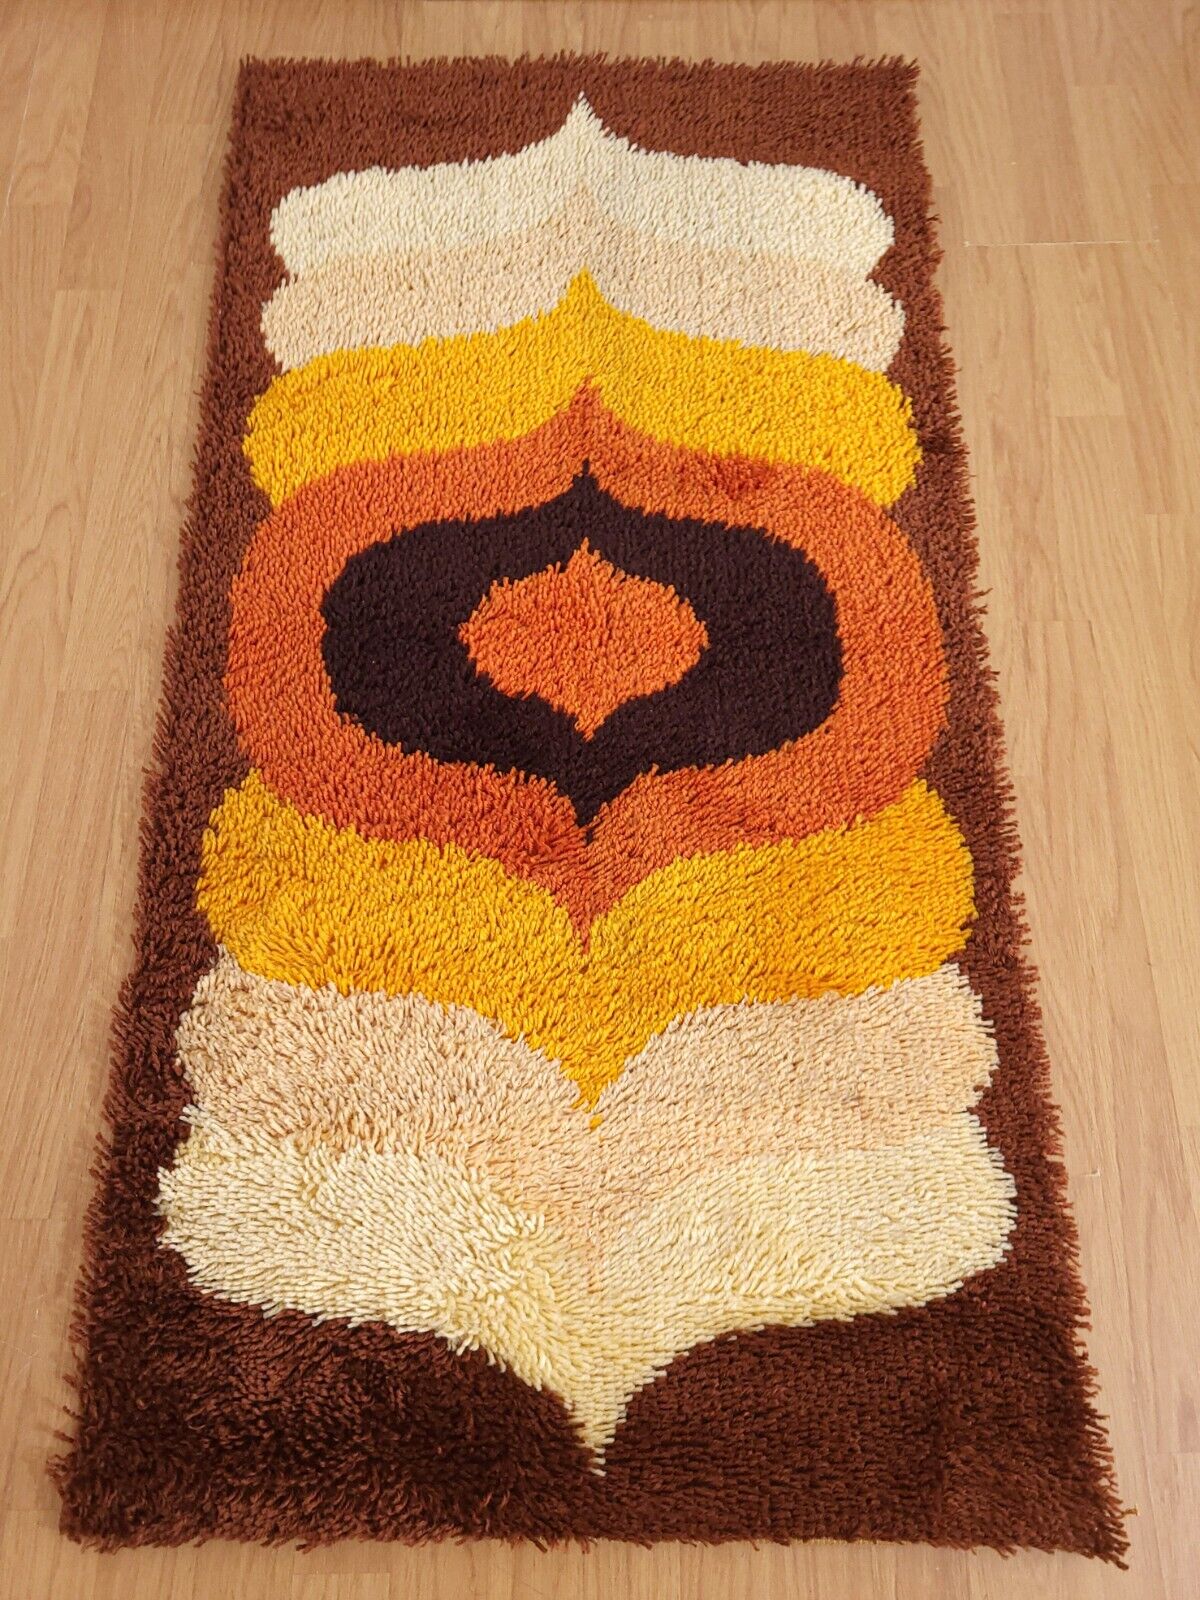 70s high pile acrylic wool rug orange brown mustard-yellow vintage mid century